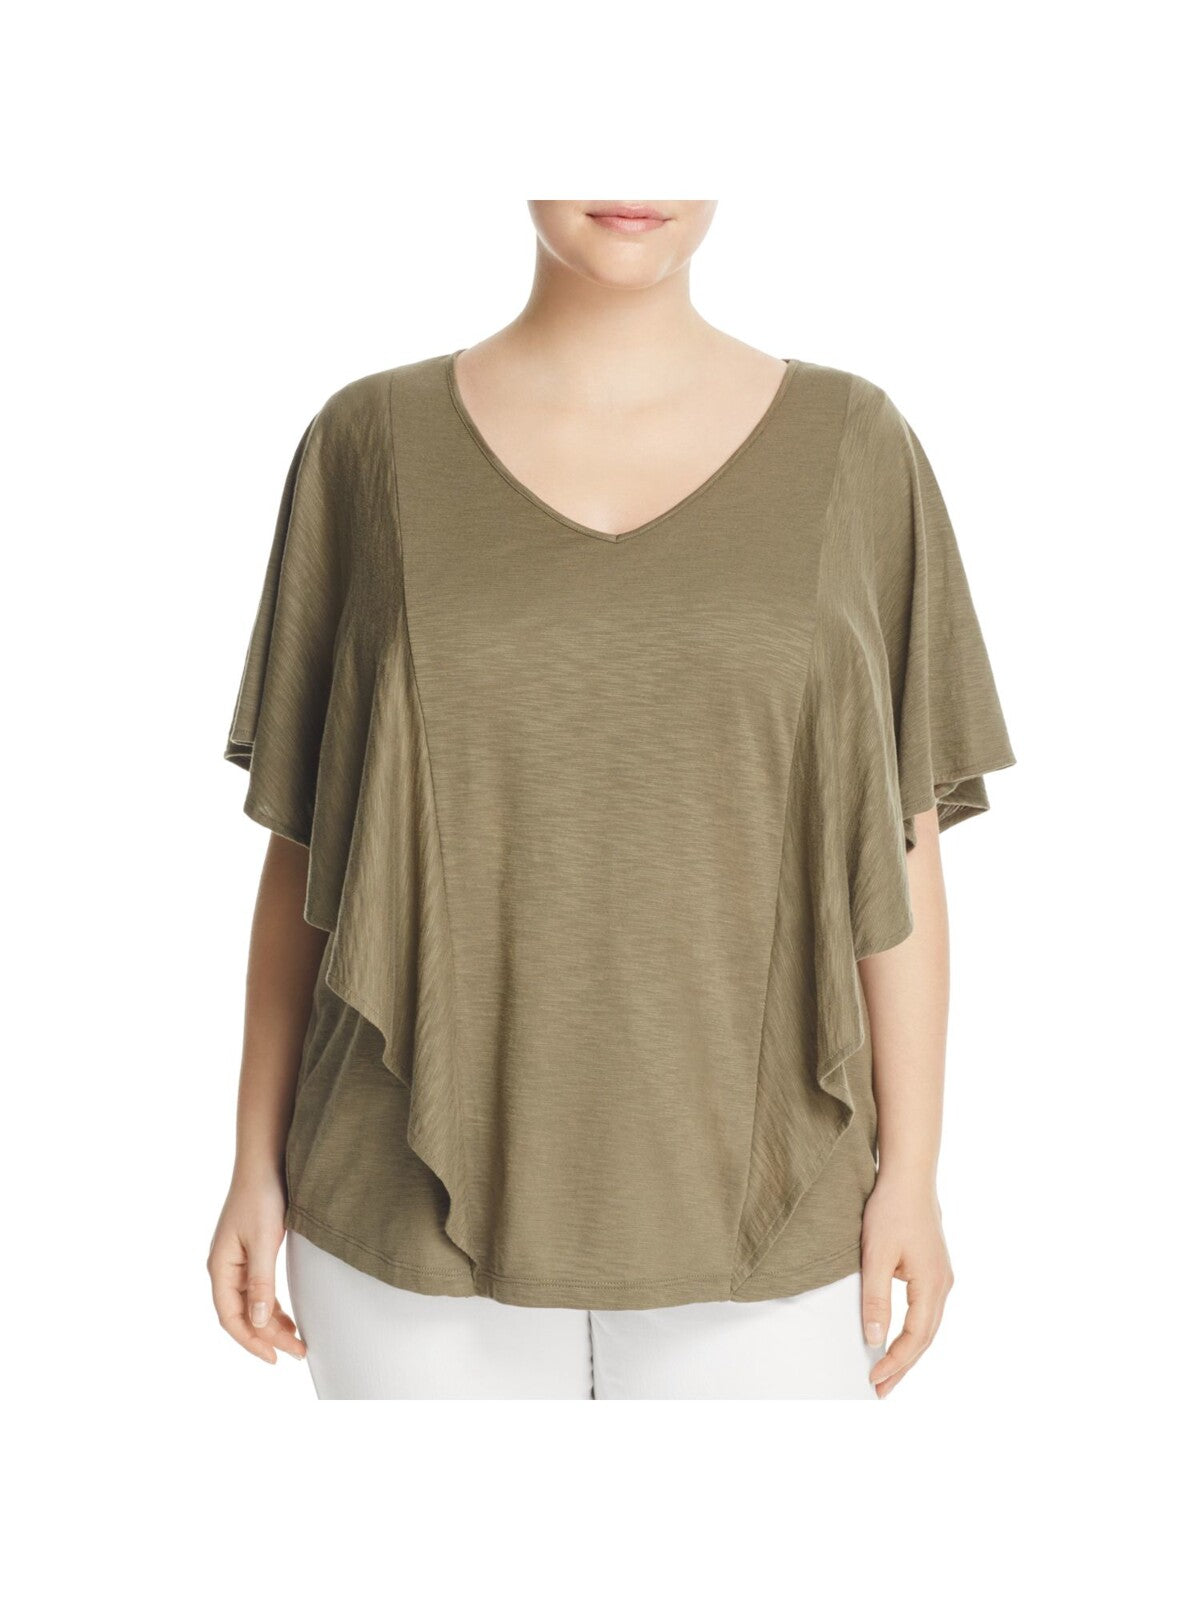 FOXCROFT Womens Green Ruffled Flutter Sleeve V Neck T-Shirt Plus 2X